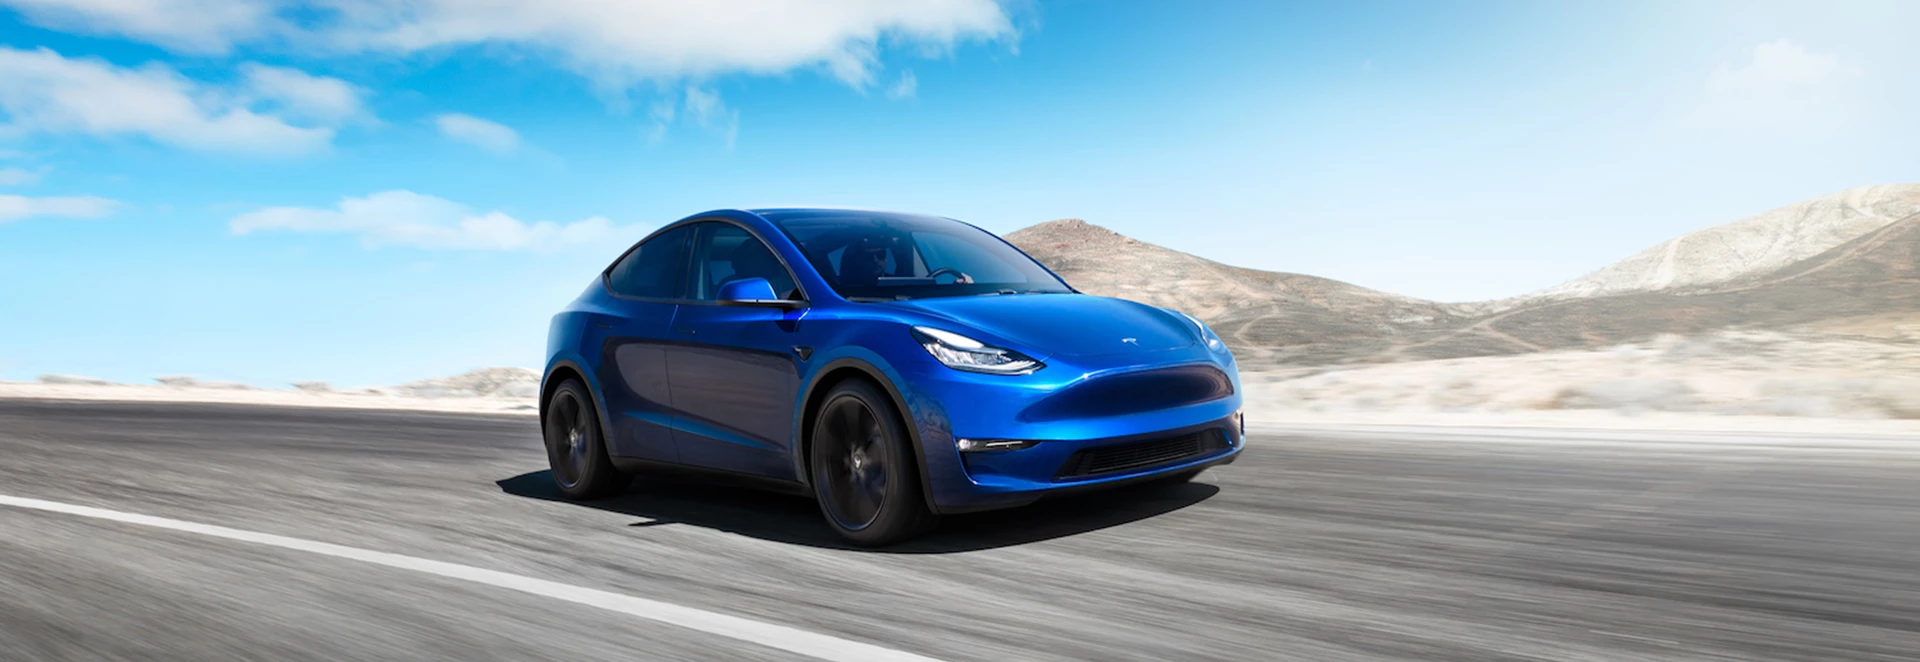 Tesla Model Y revealed